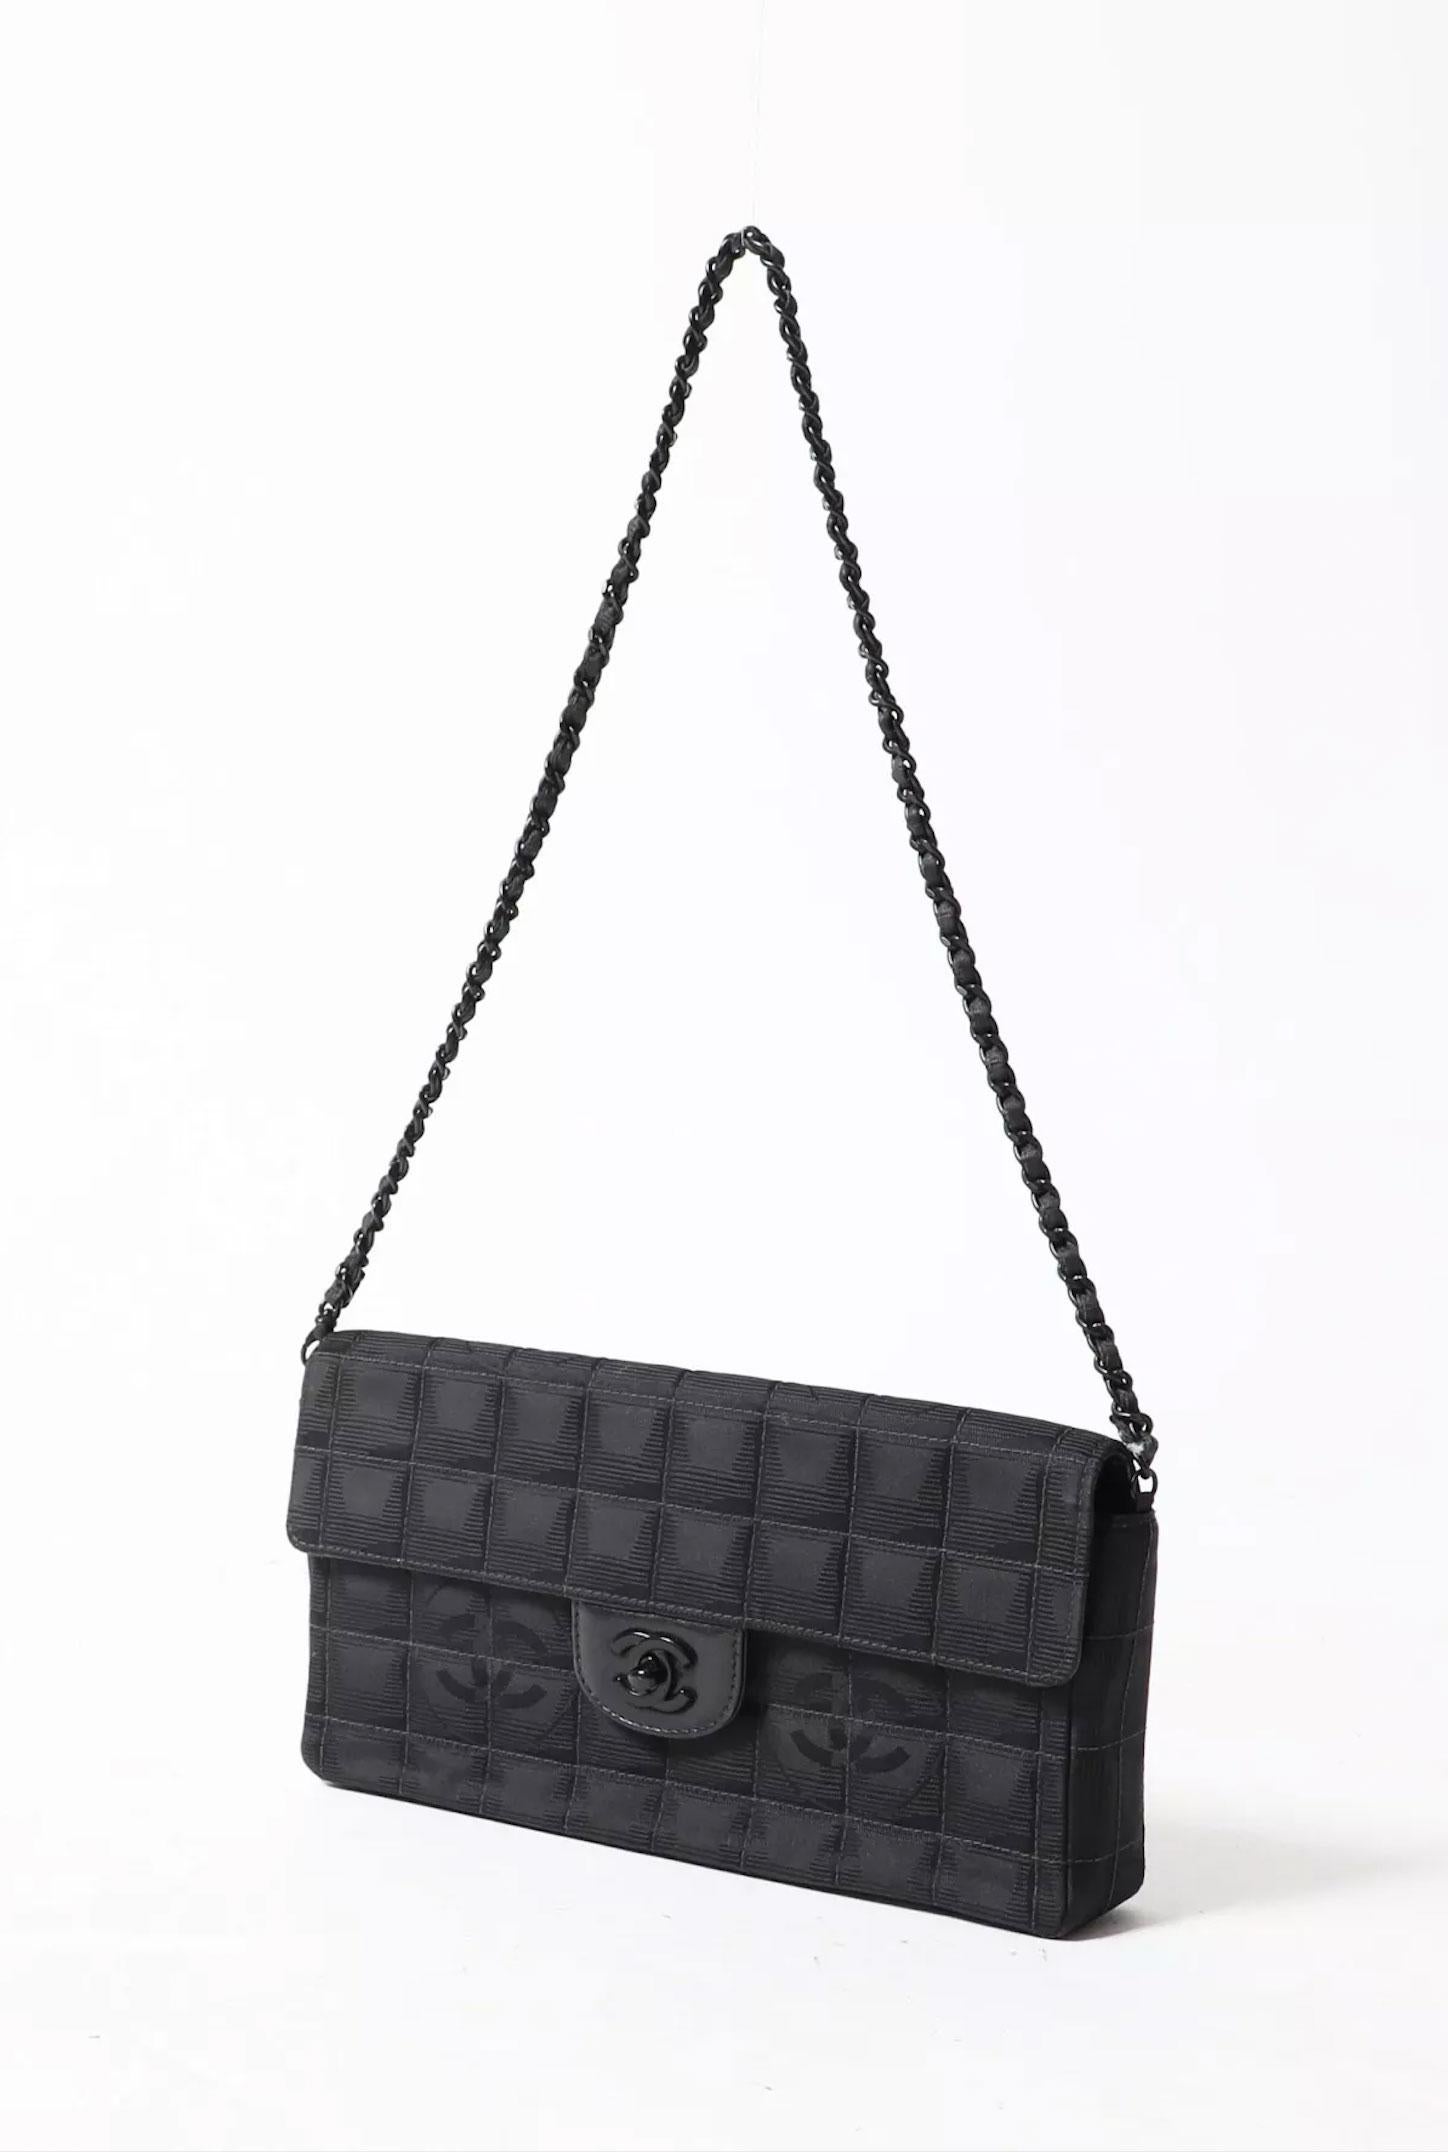 Chanel 2002 Vintage So Black Long Medium Shoulder Convertible Clutch Flap Bag For Sale 3